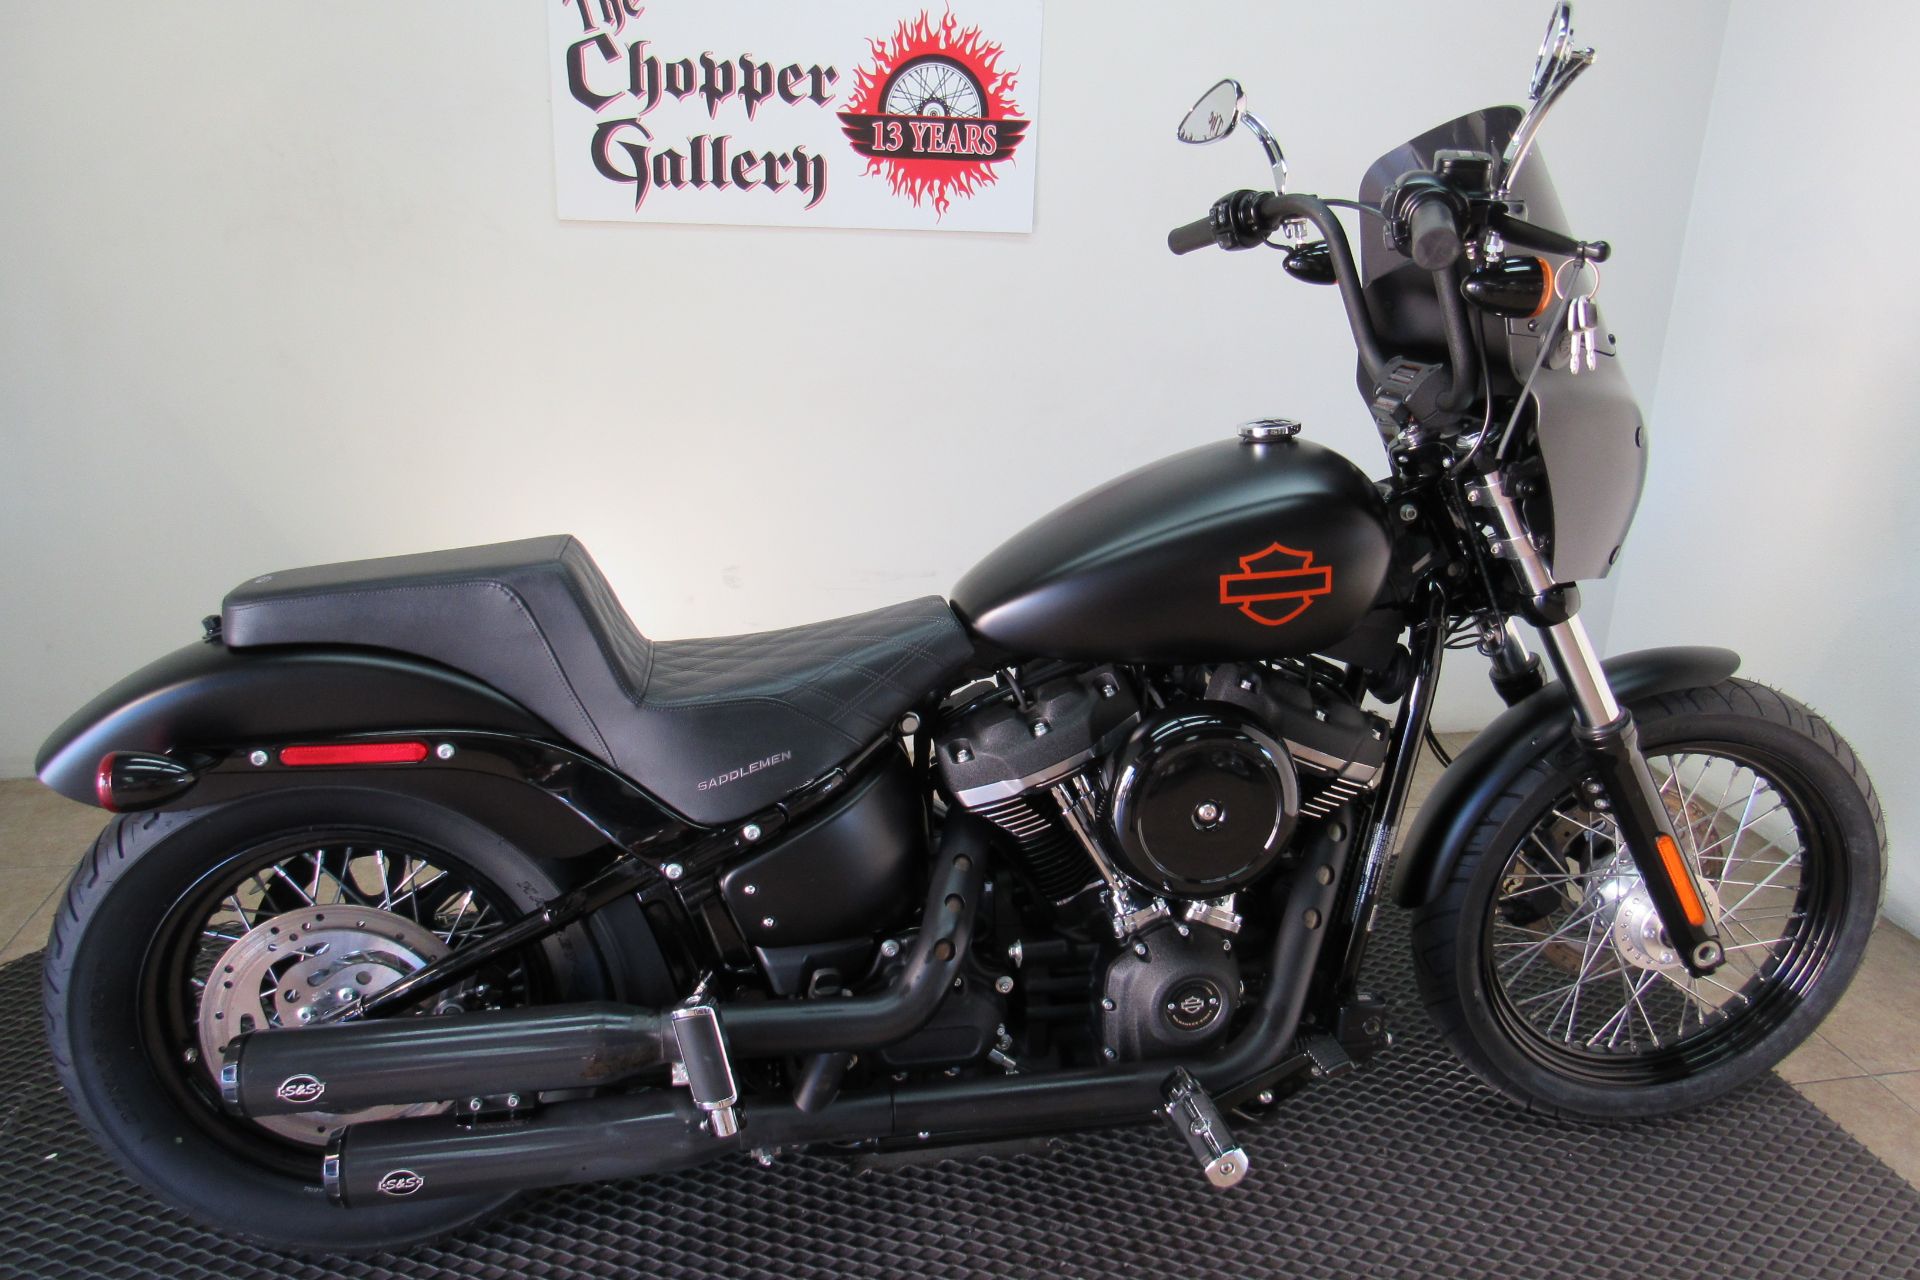 2020 Harley-Davidson Street Bob® in Temecula, California - Photo 5